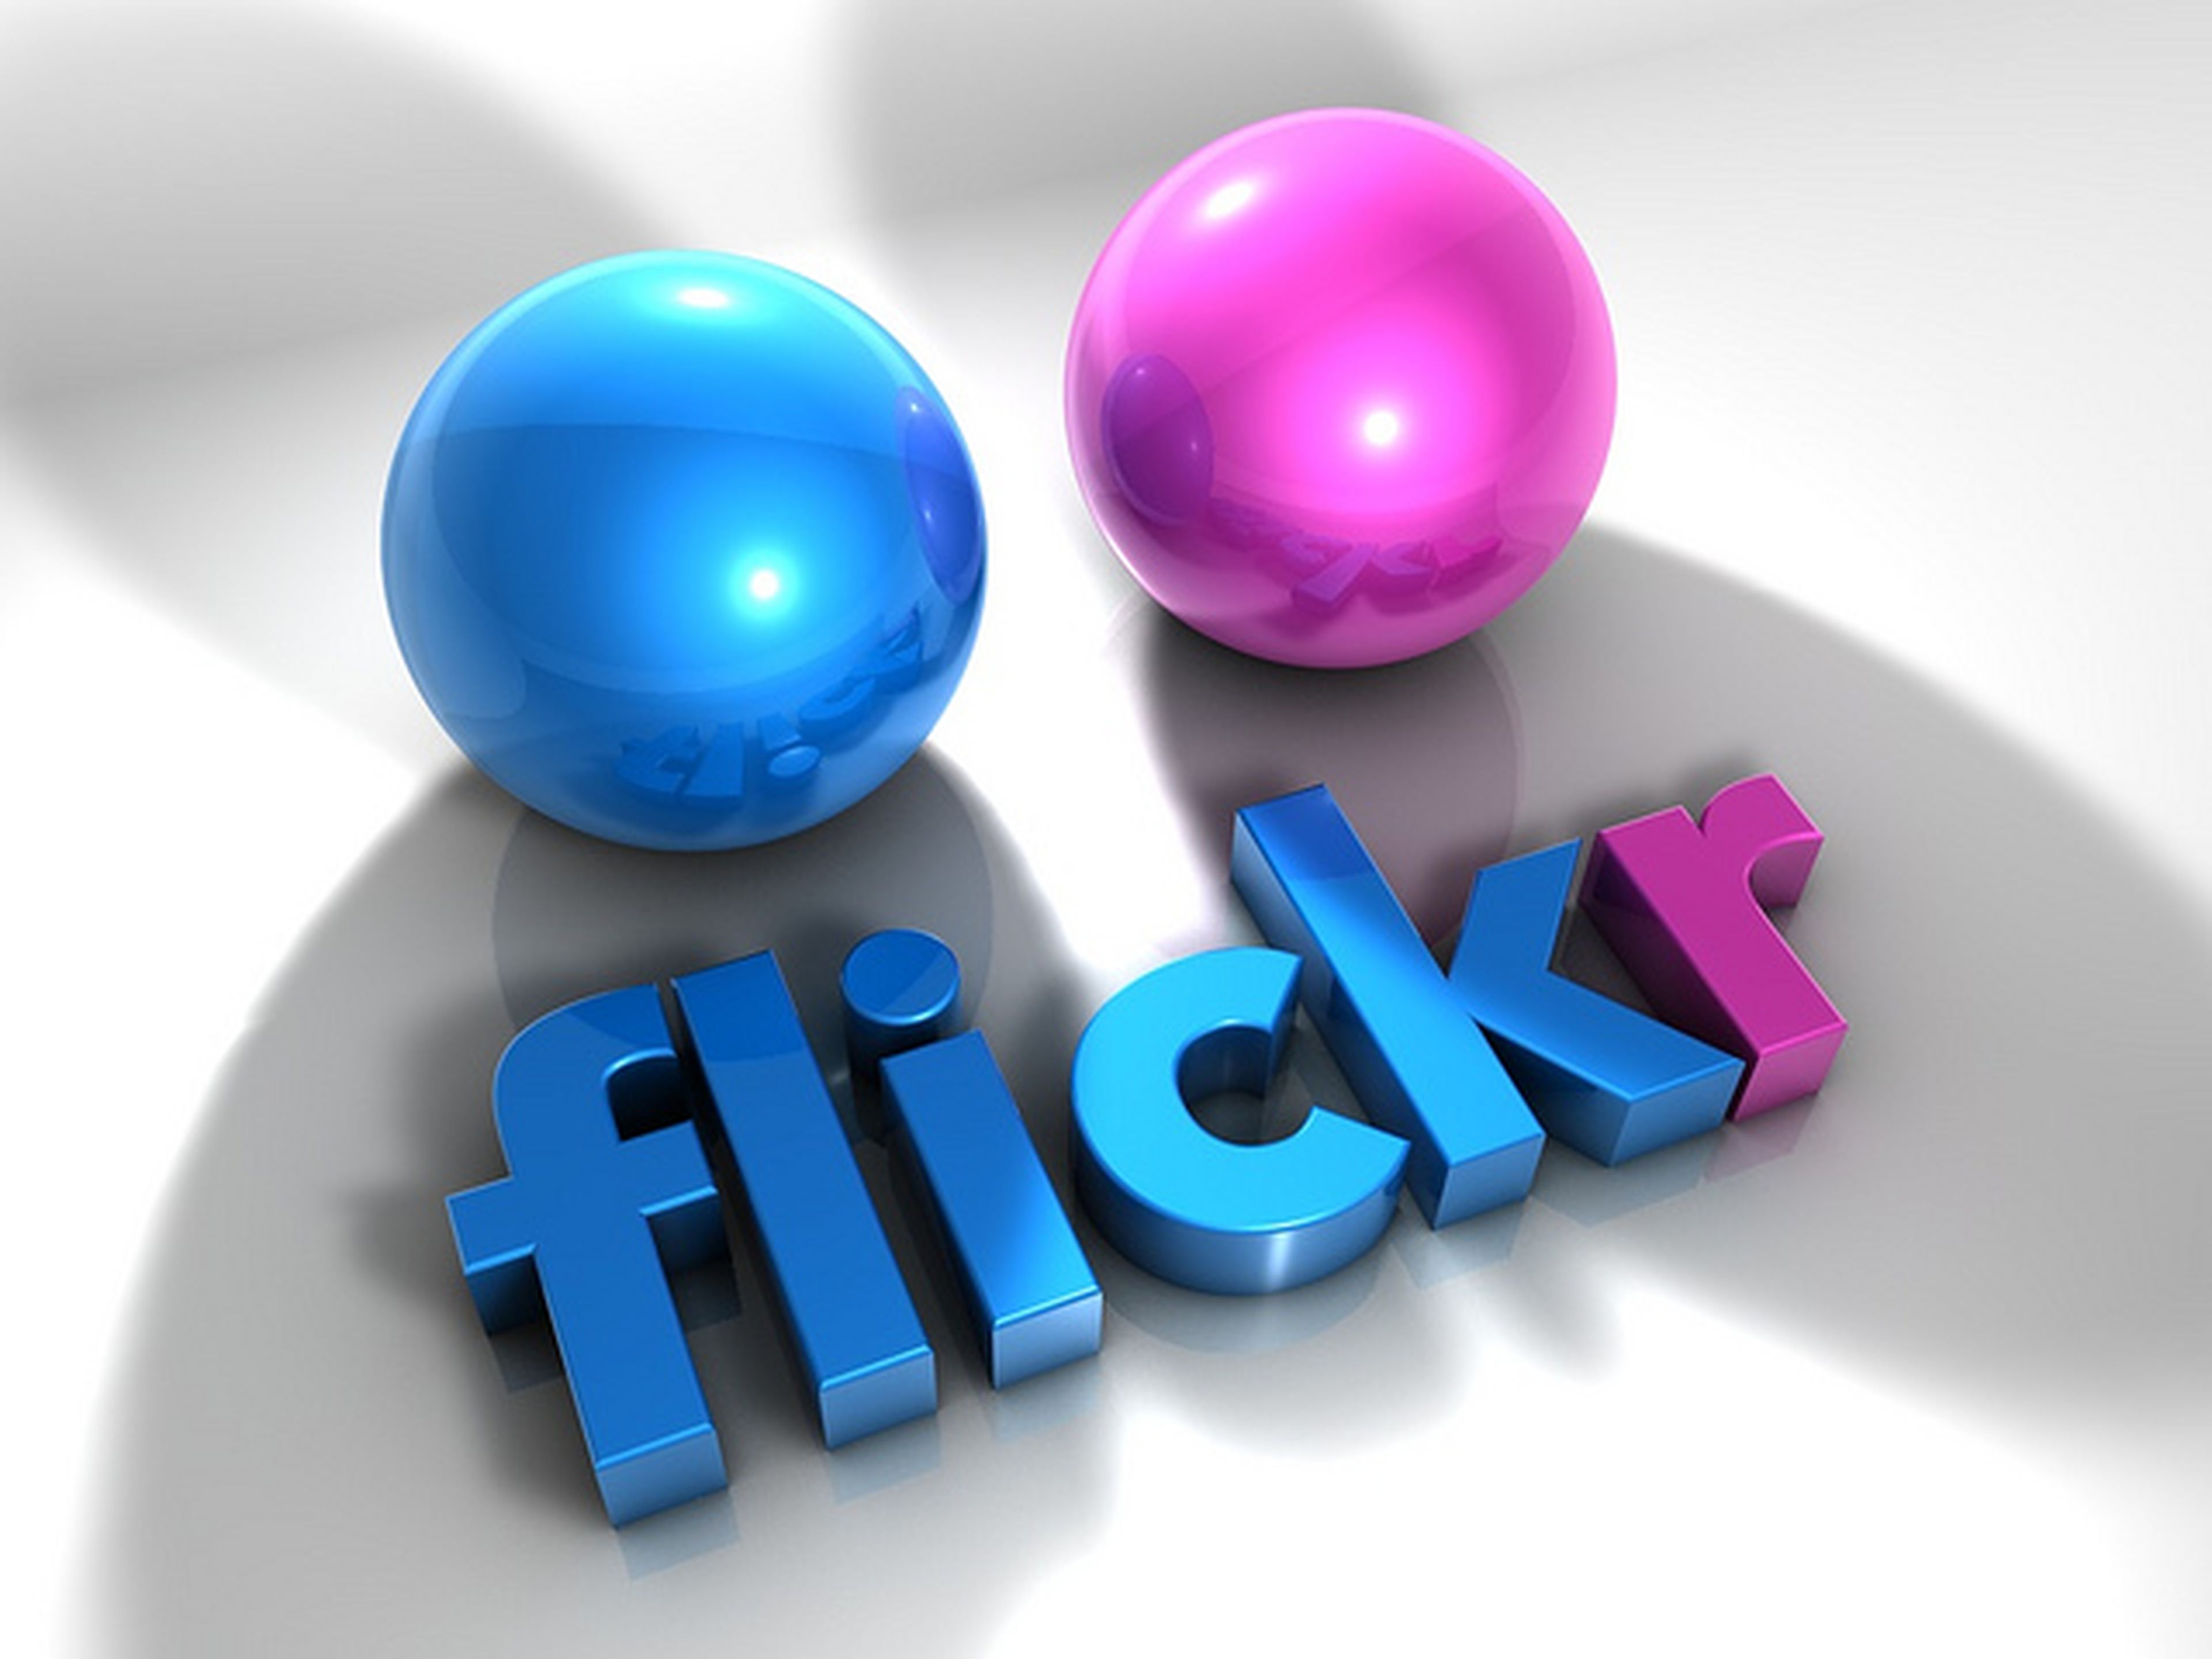 Logo de Flickr